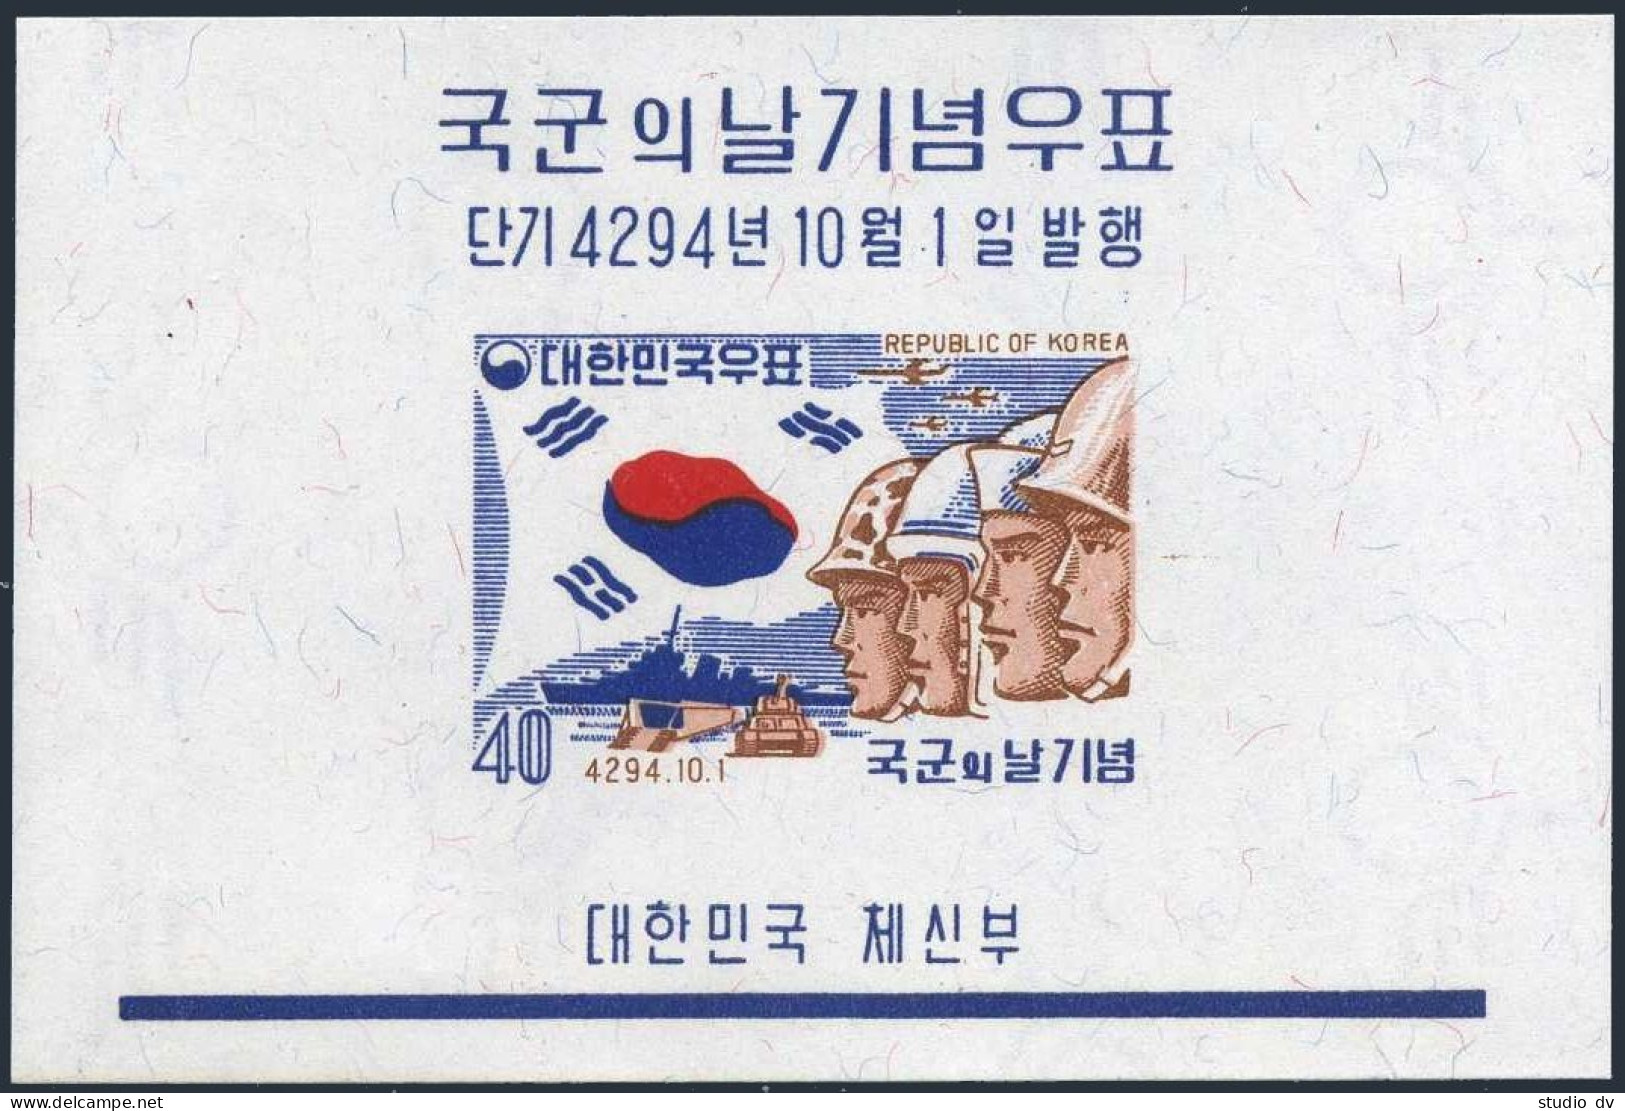 Korea South 329a, MNH. Michel Bl.167. Armed Force Day, 1961. Flag,Ship,Tank,Planes. - Corée Du Sud